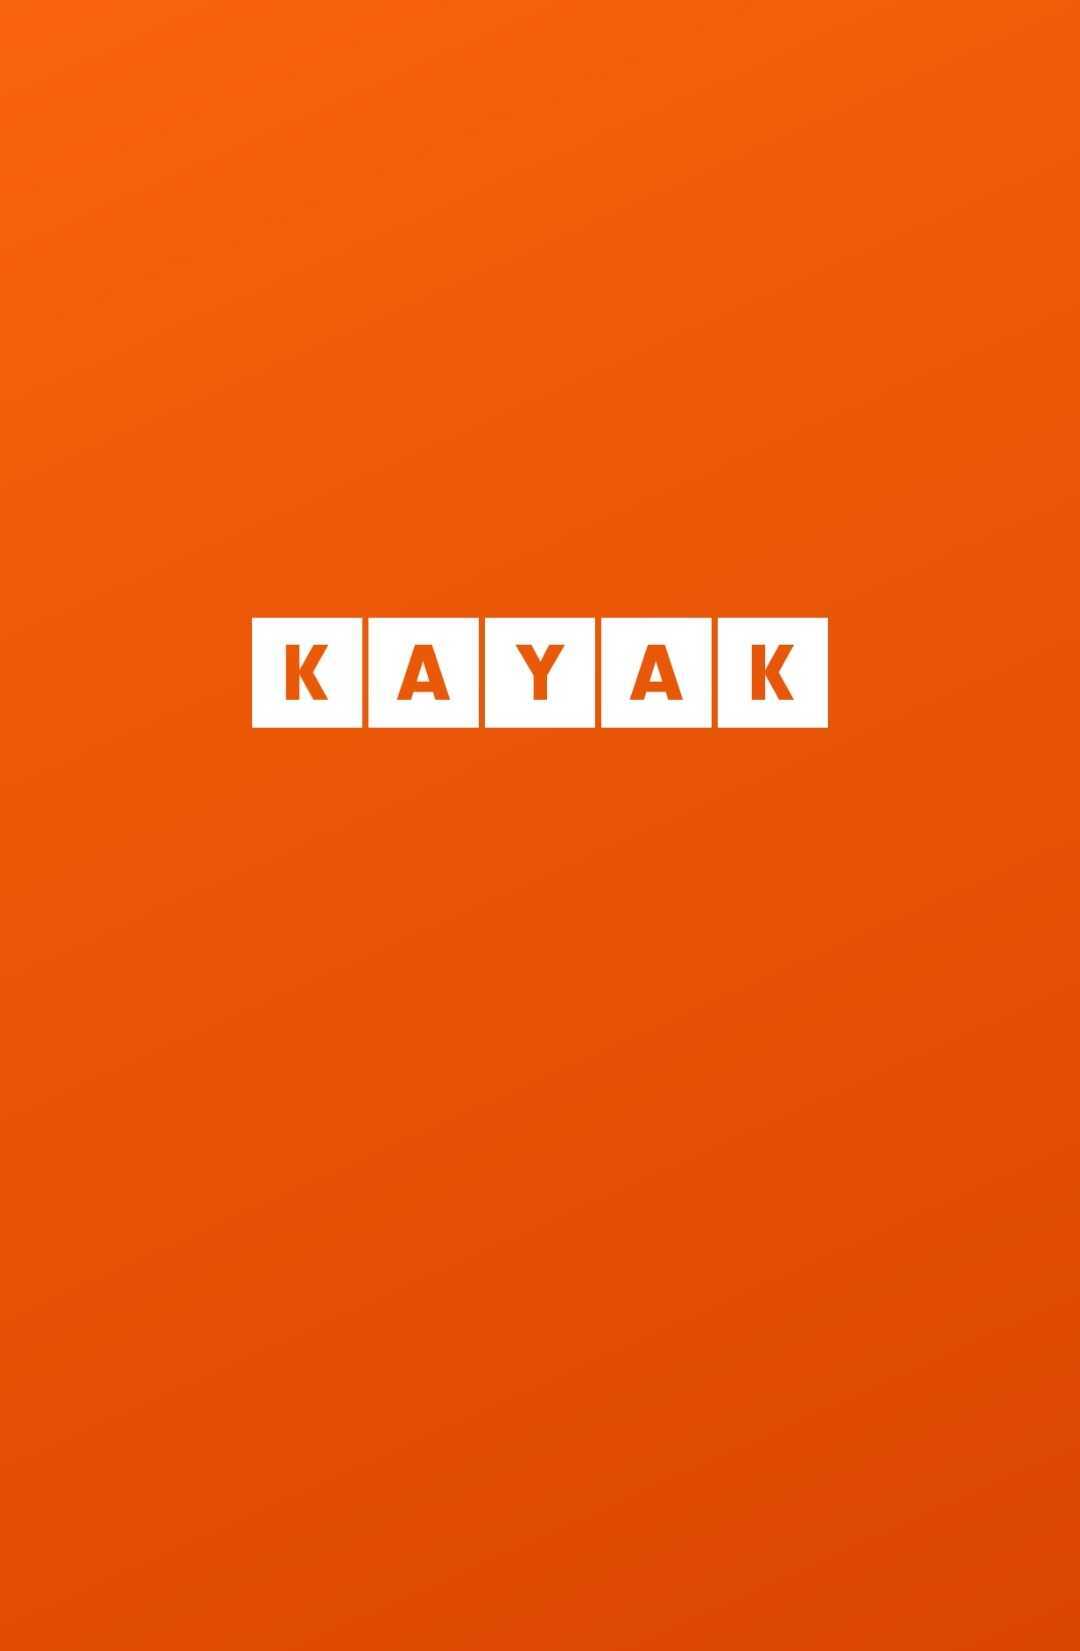 Kayak app